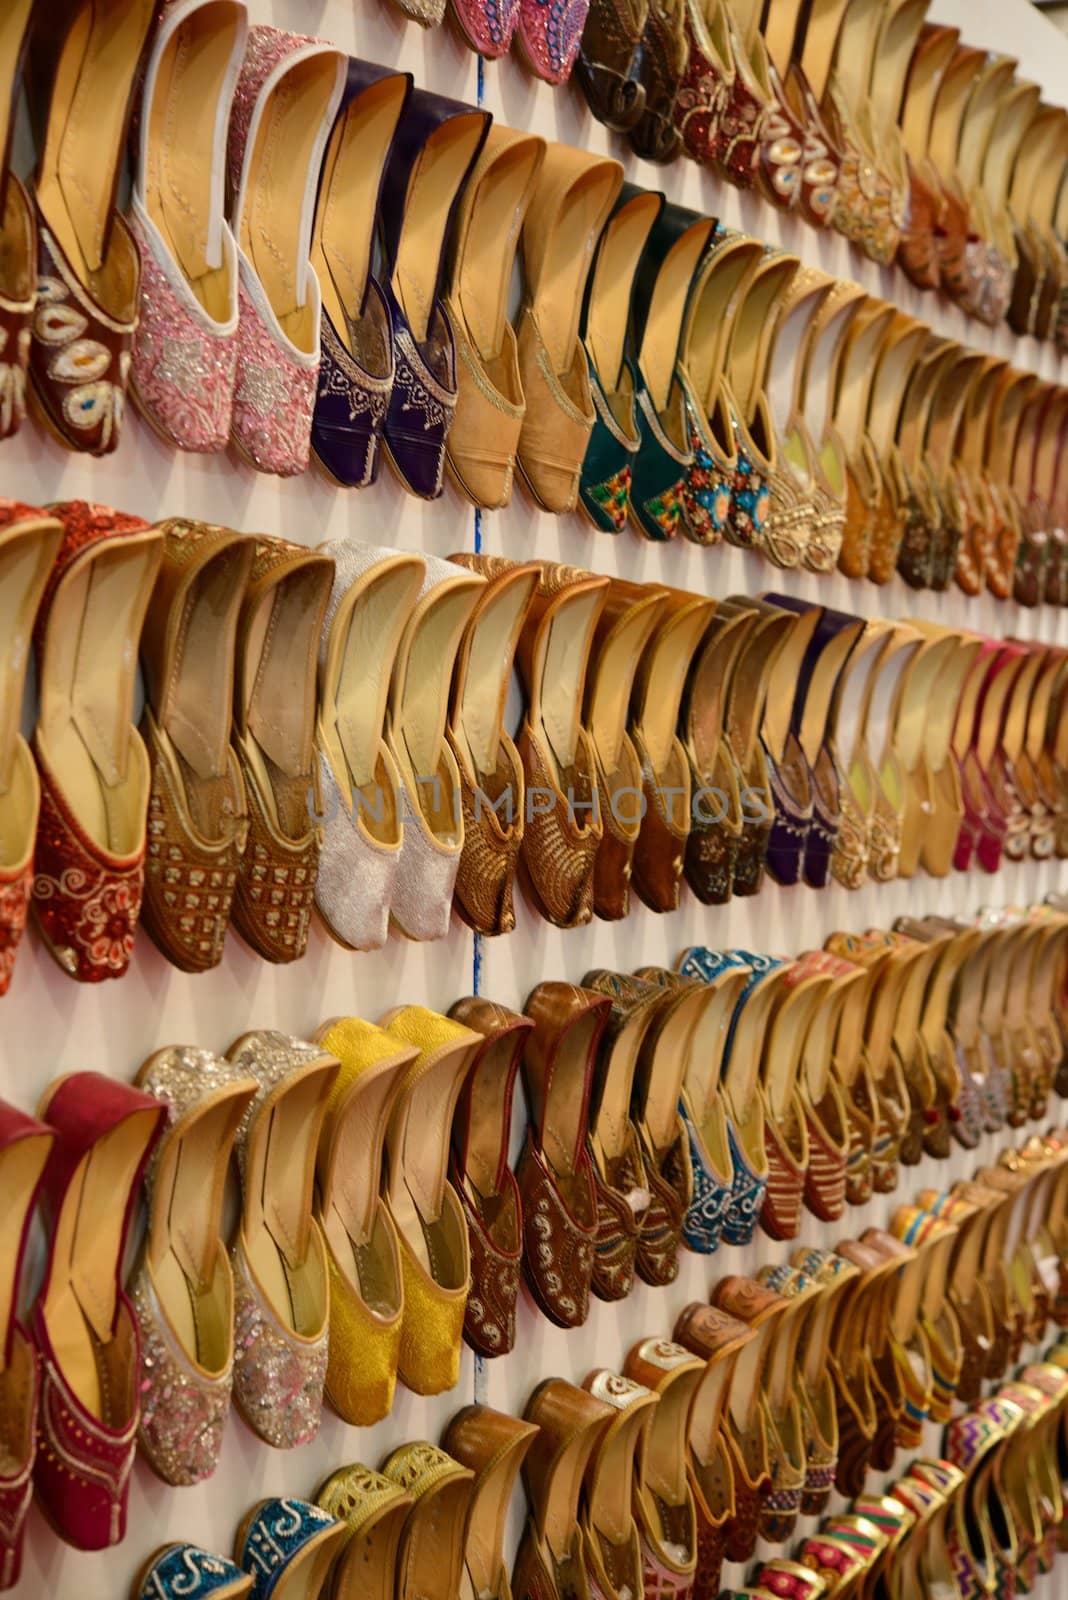 A shoes market by mizio1970